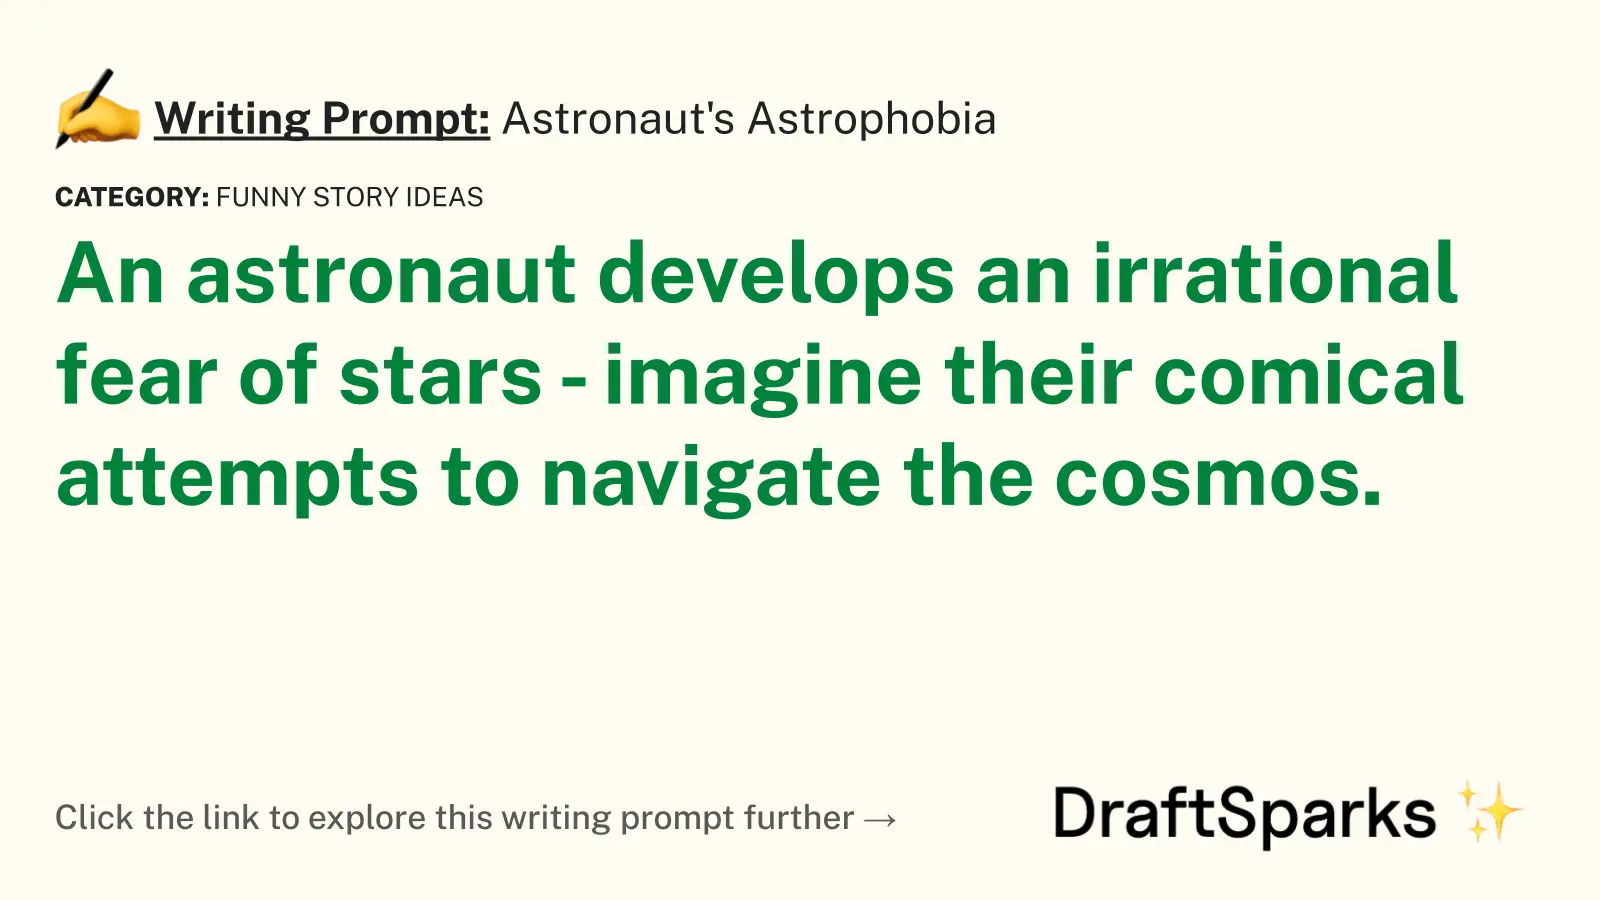 Astronaut’s Astrophobia